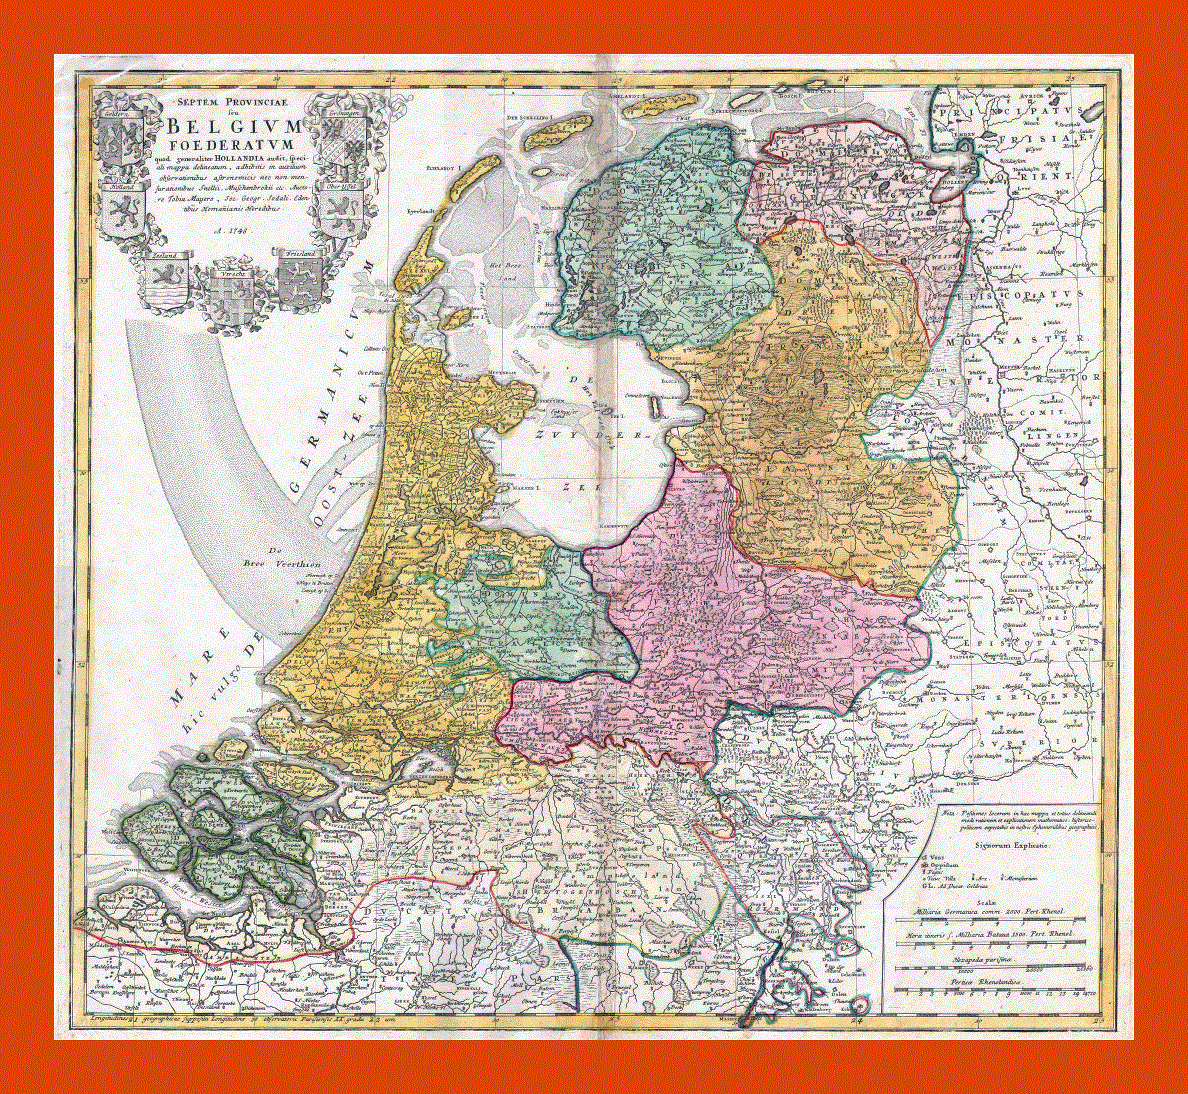 Old map of Netherlands (Holland) - 1748